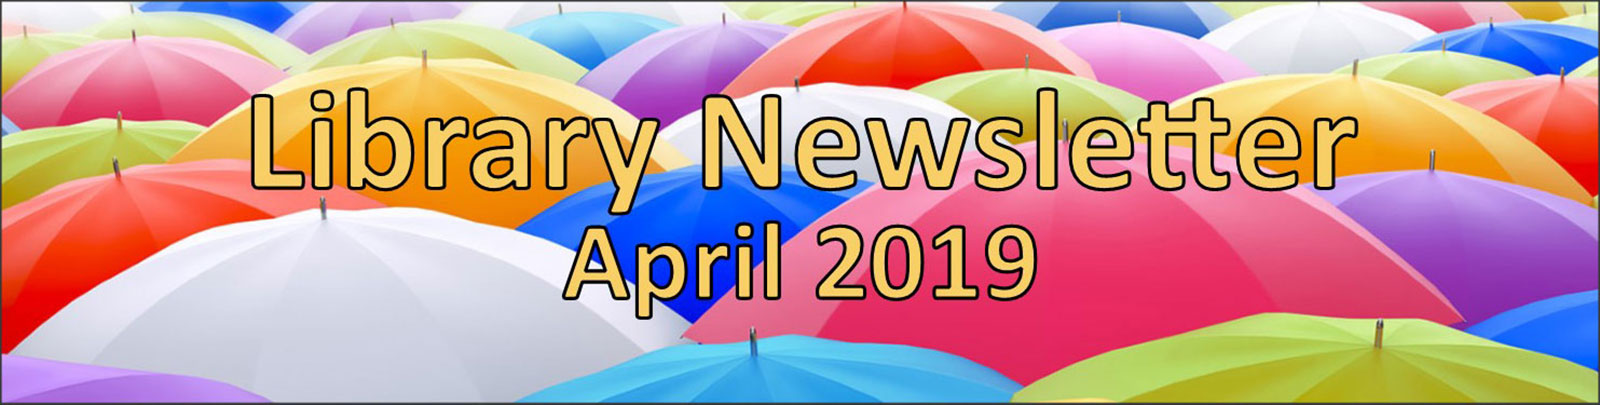 Library Newsletter April 2019 umbrella banner